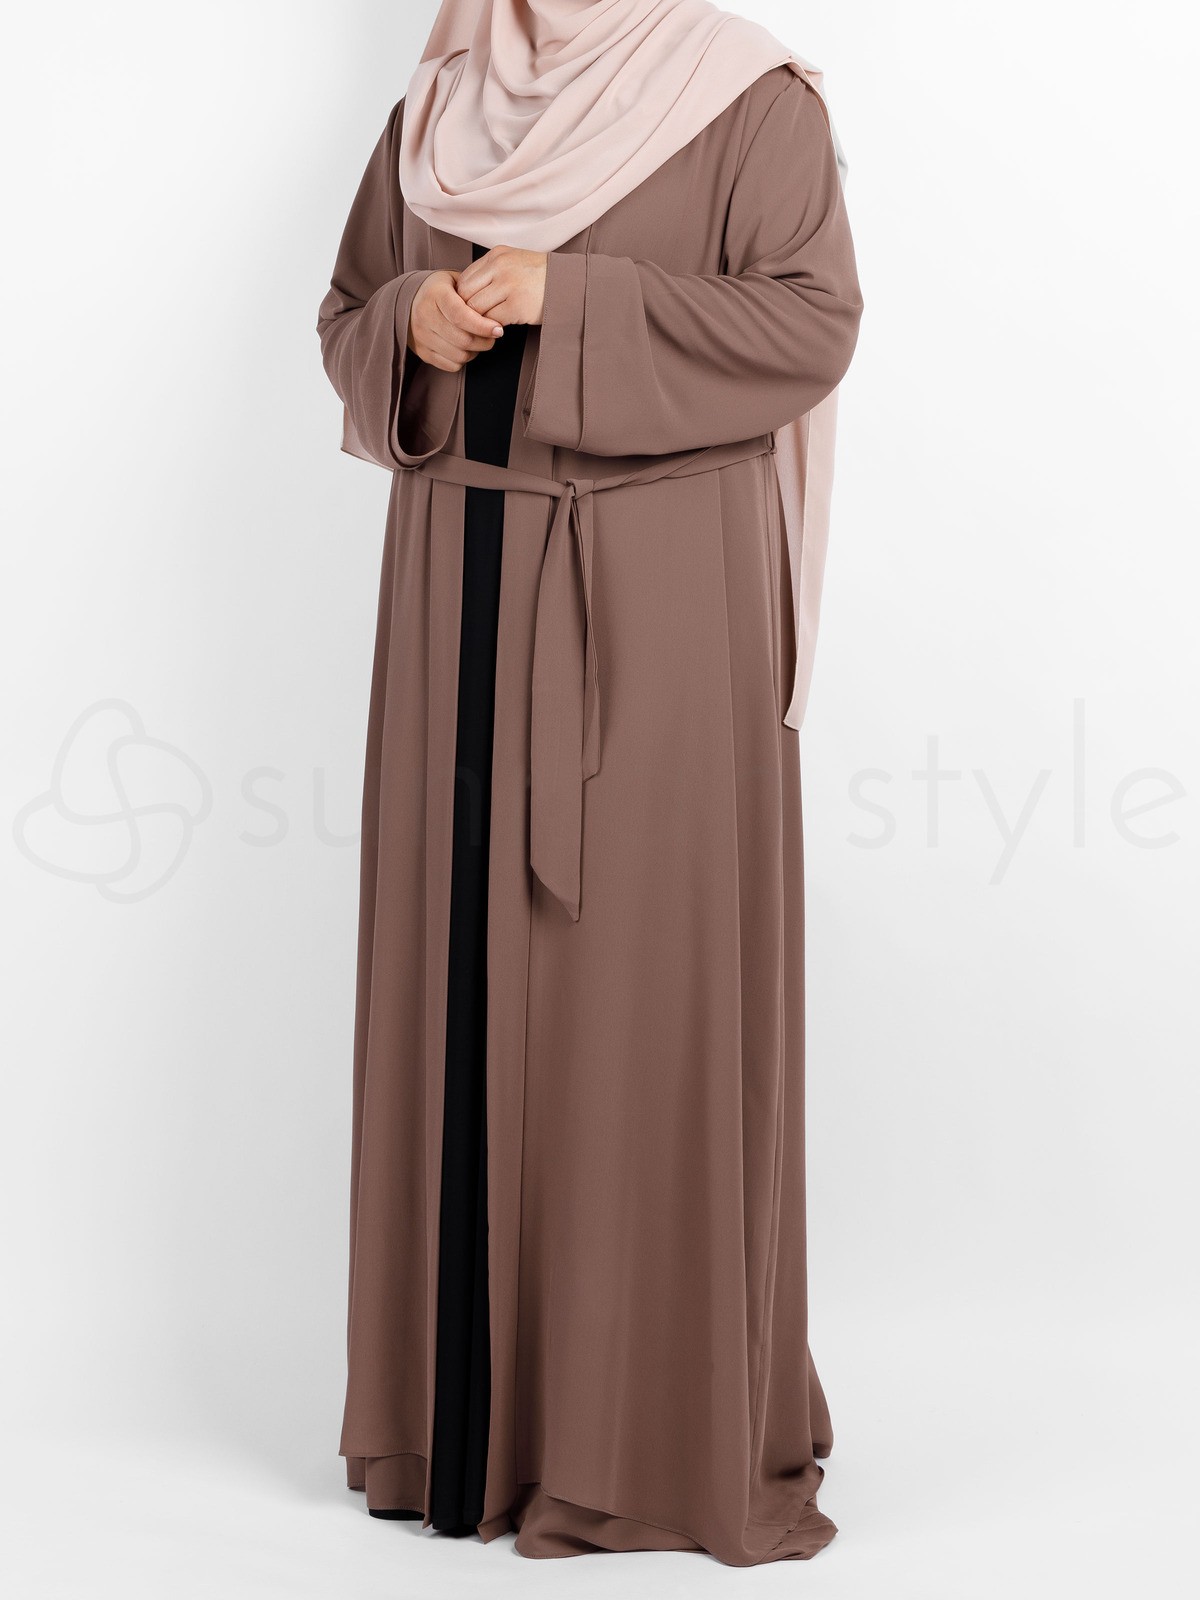 Sunnah Style - Chiffon Layered Robe (Cafe)